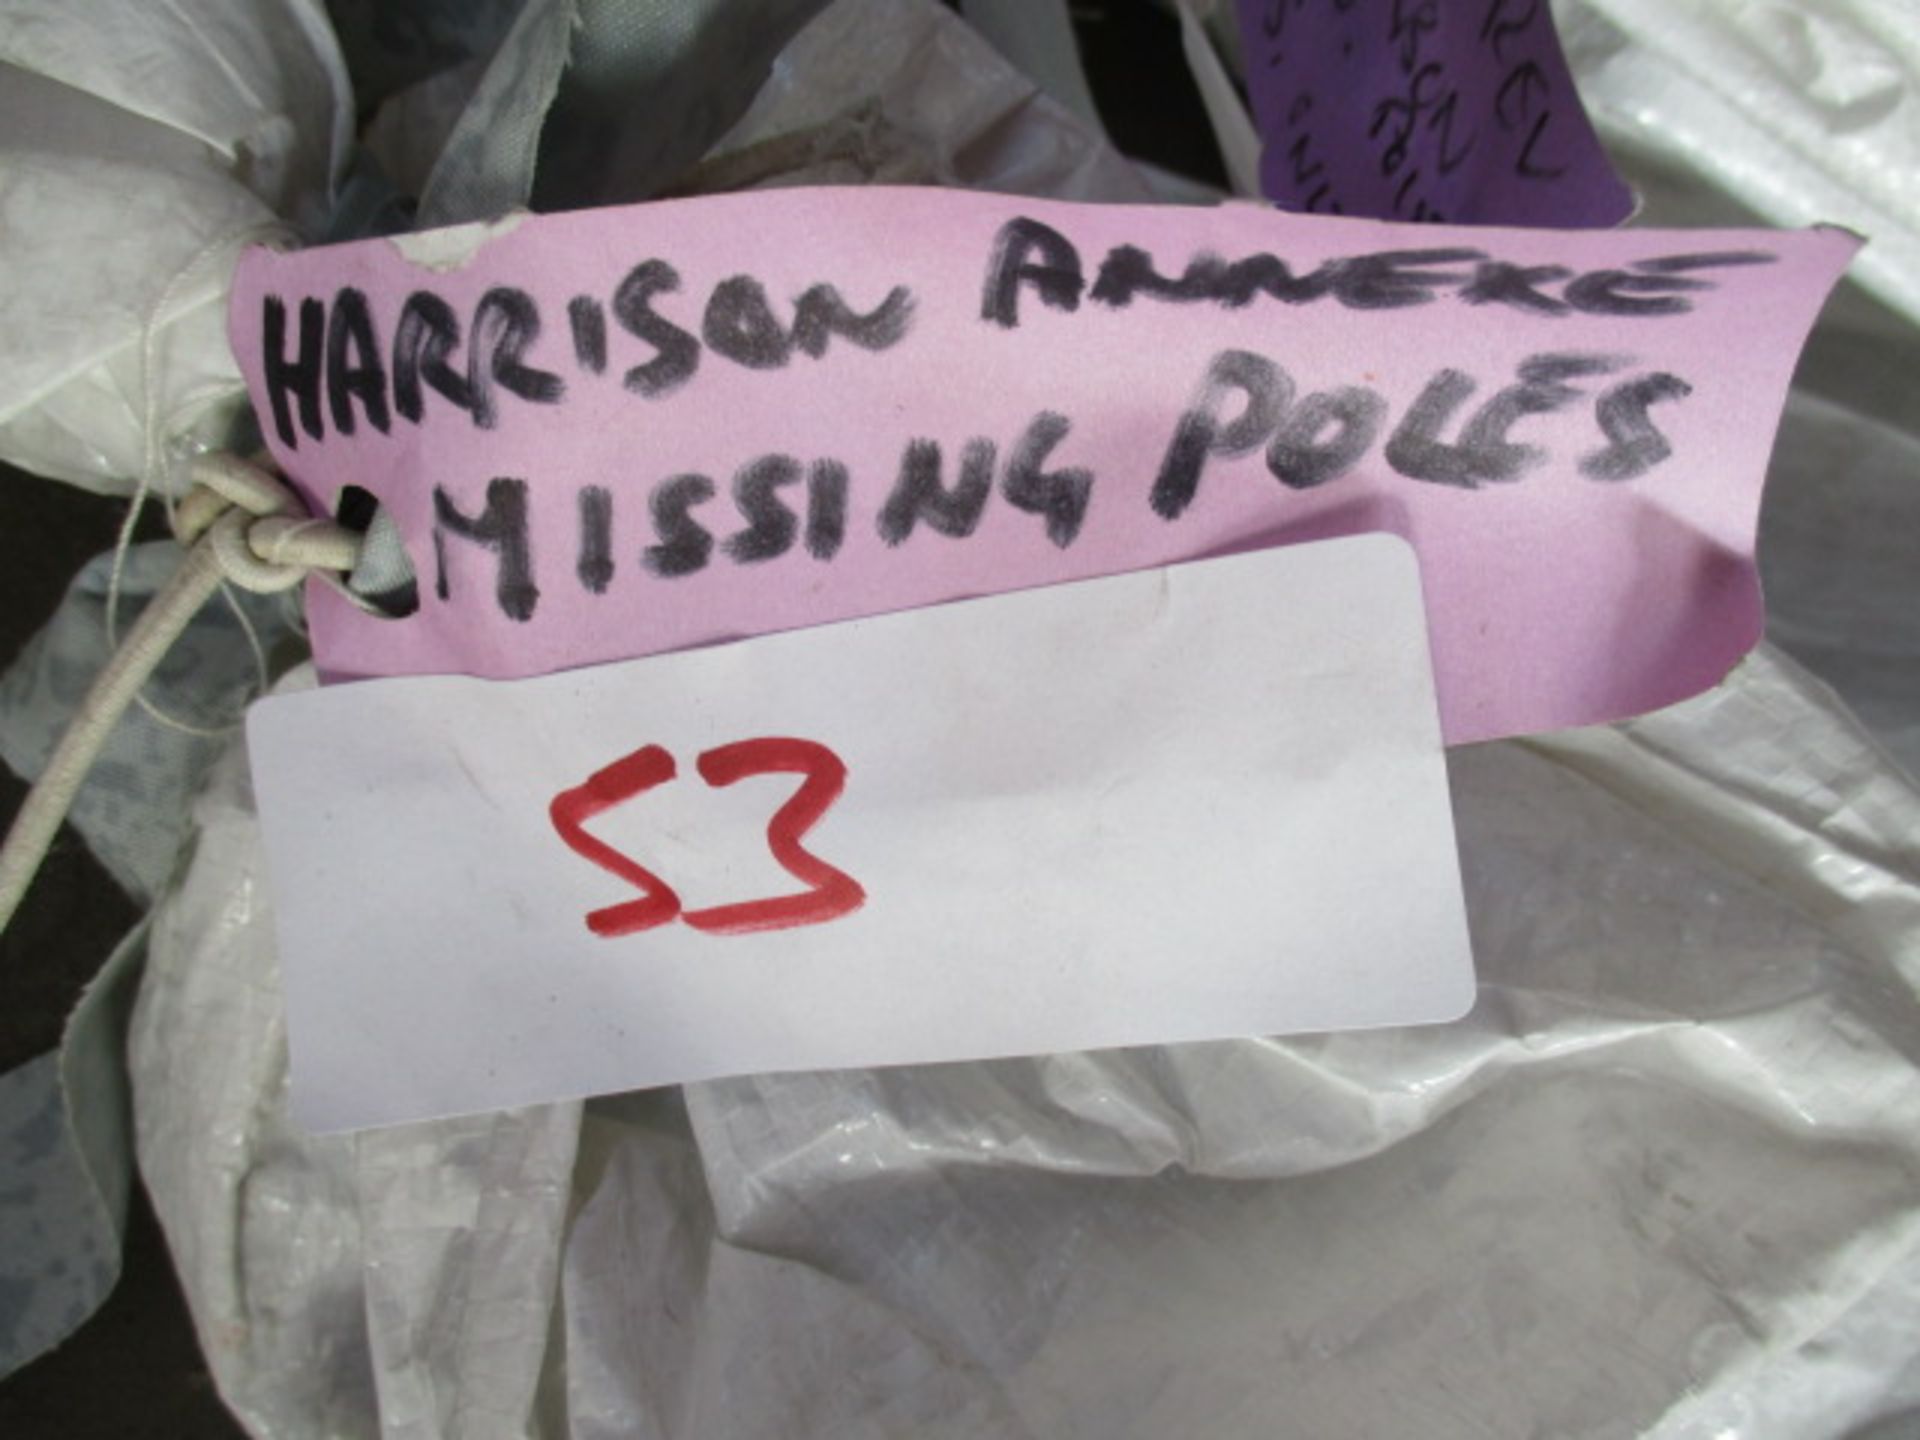 Label says Harrison annex missing poles